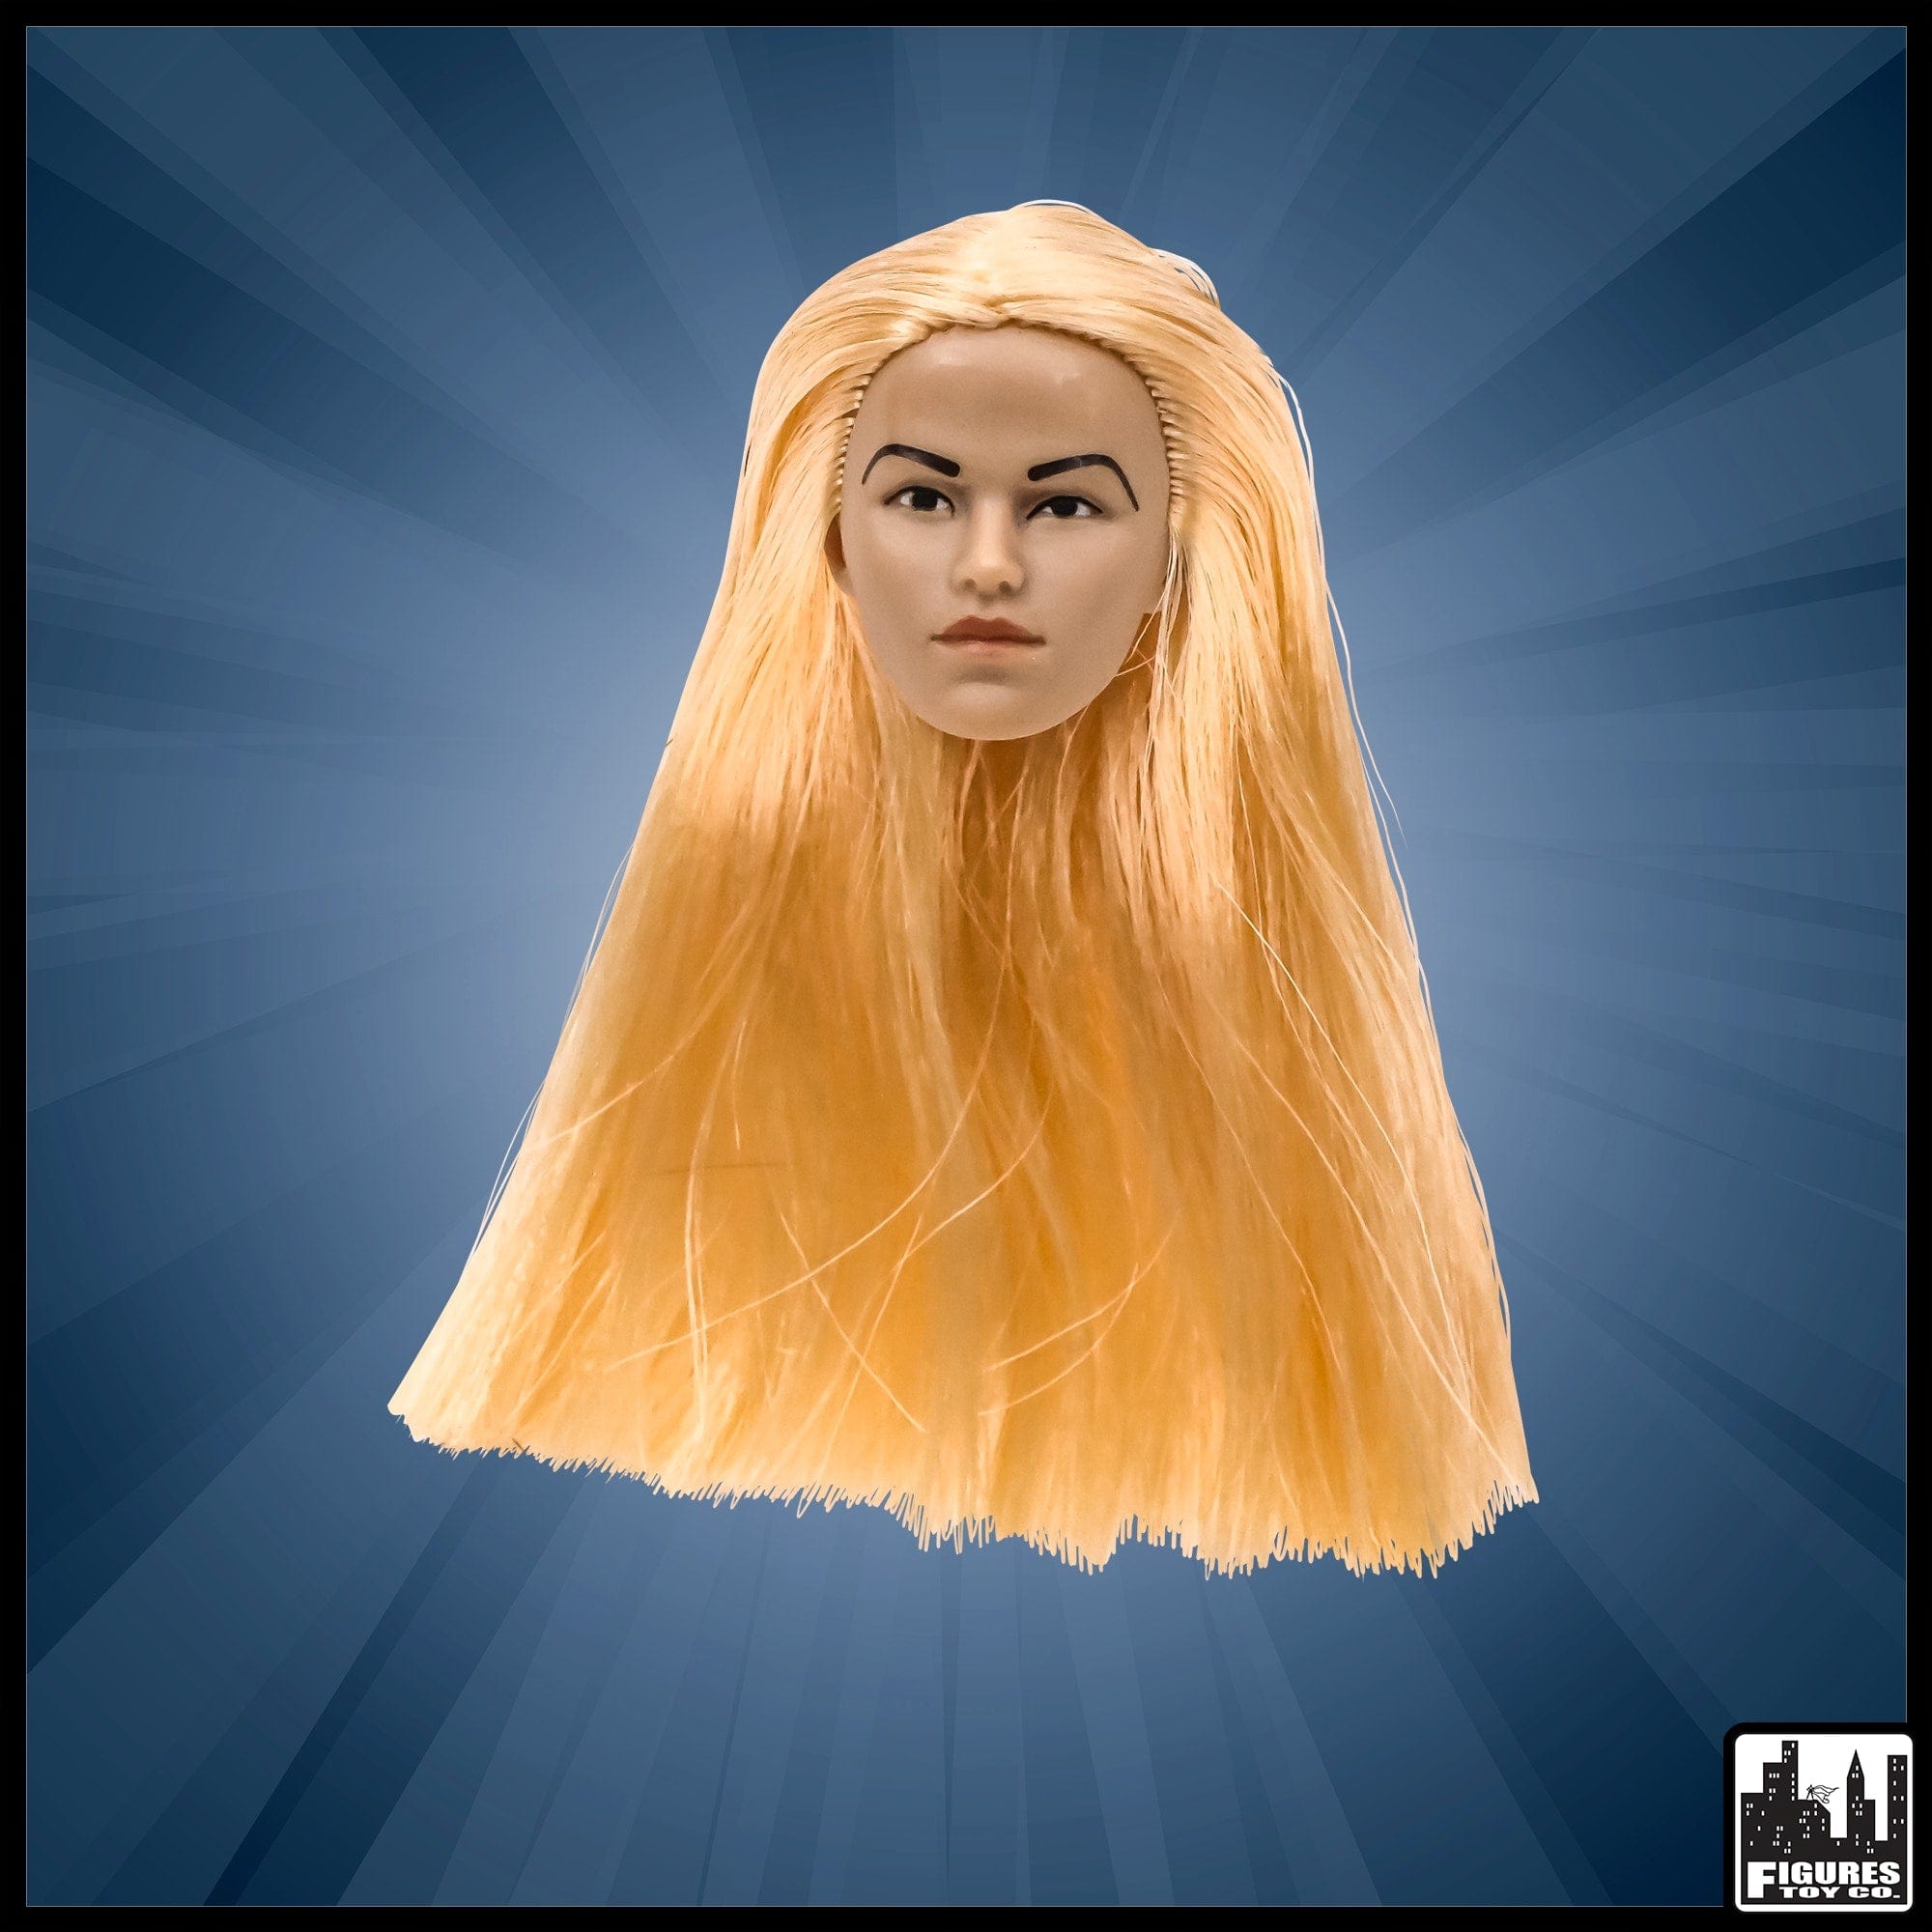 White FEMALE Interchangeable Wrestling Action Figure Head With Long Light Orange Hair